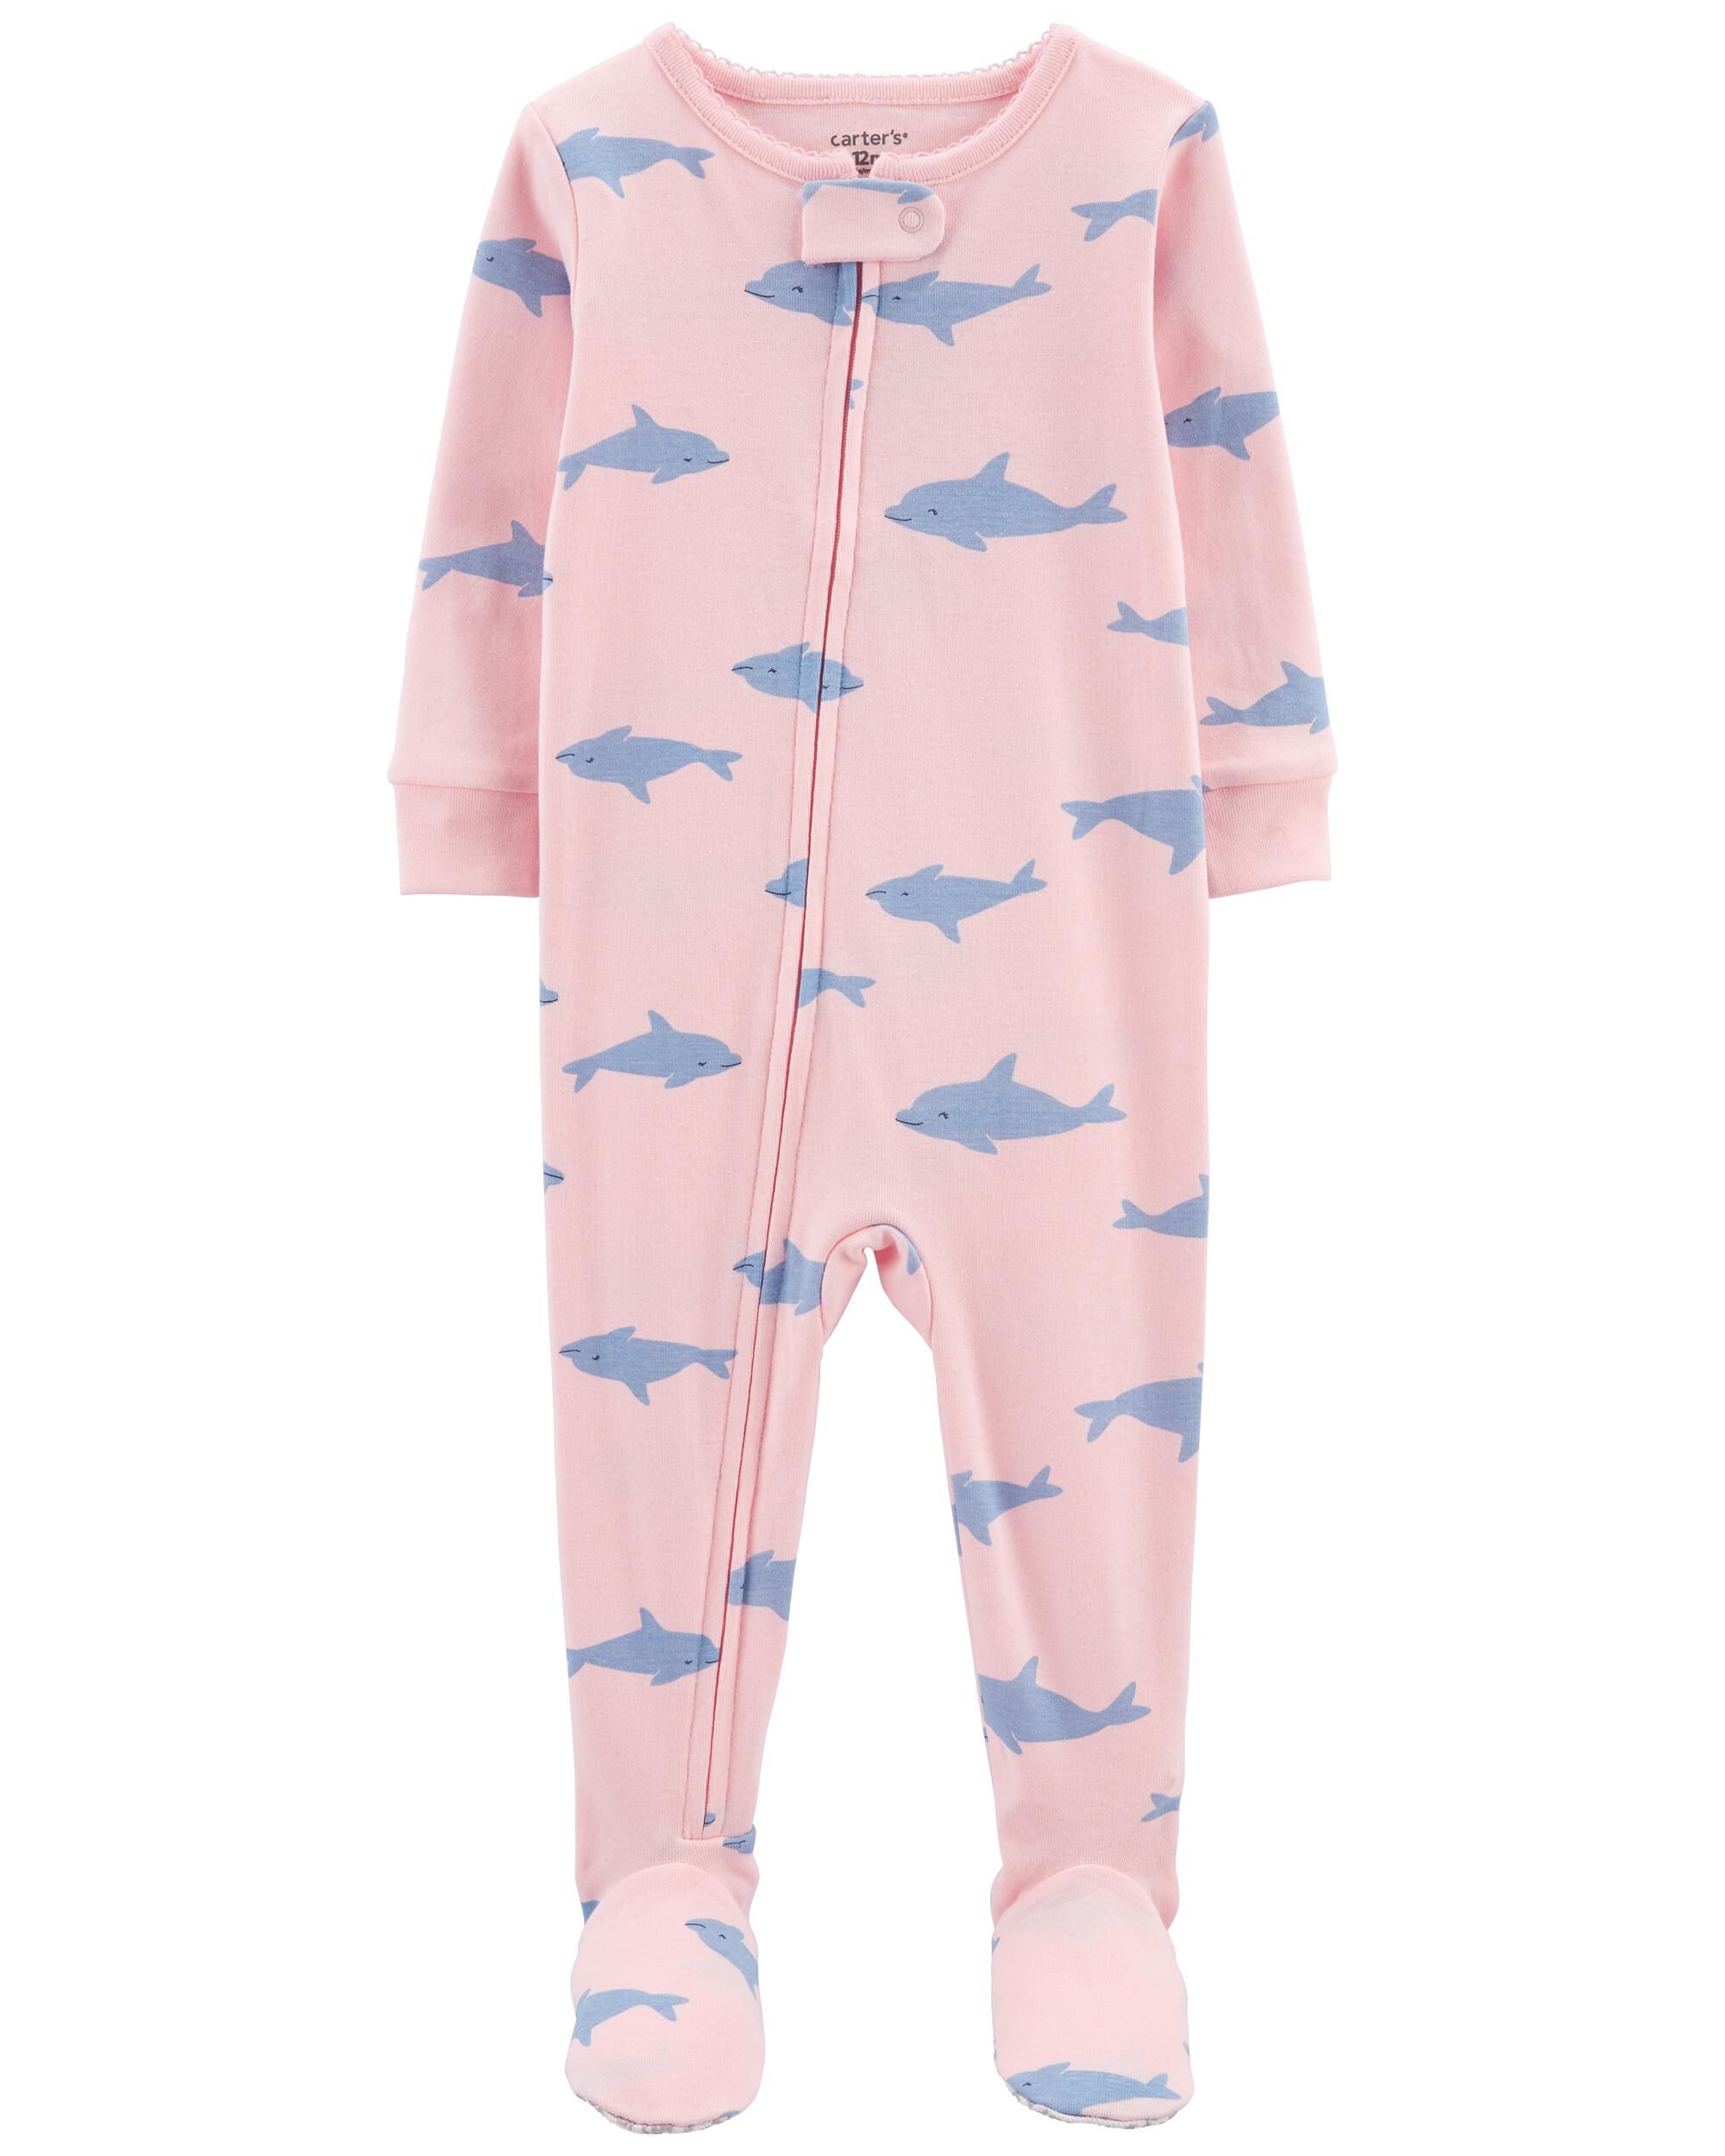 New Carter's Sea Creature Footless pajama PJs Girl Sleeper 1-Pc Snug Fit Cotton